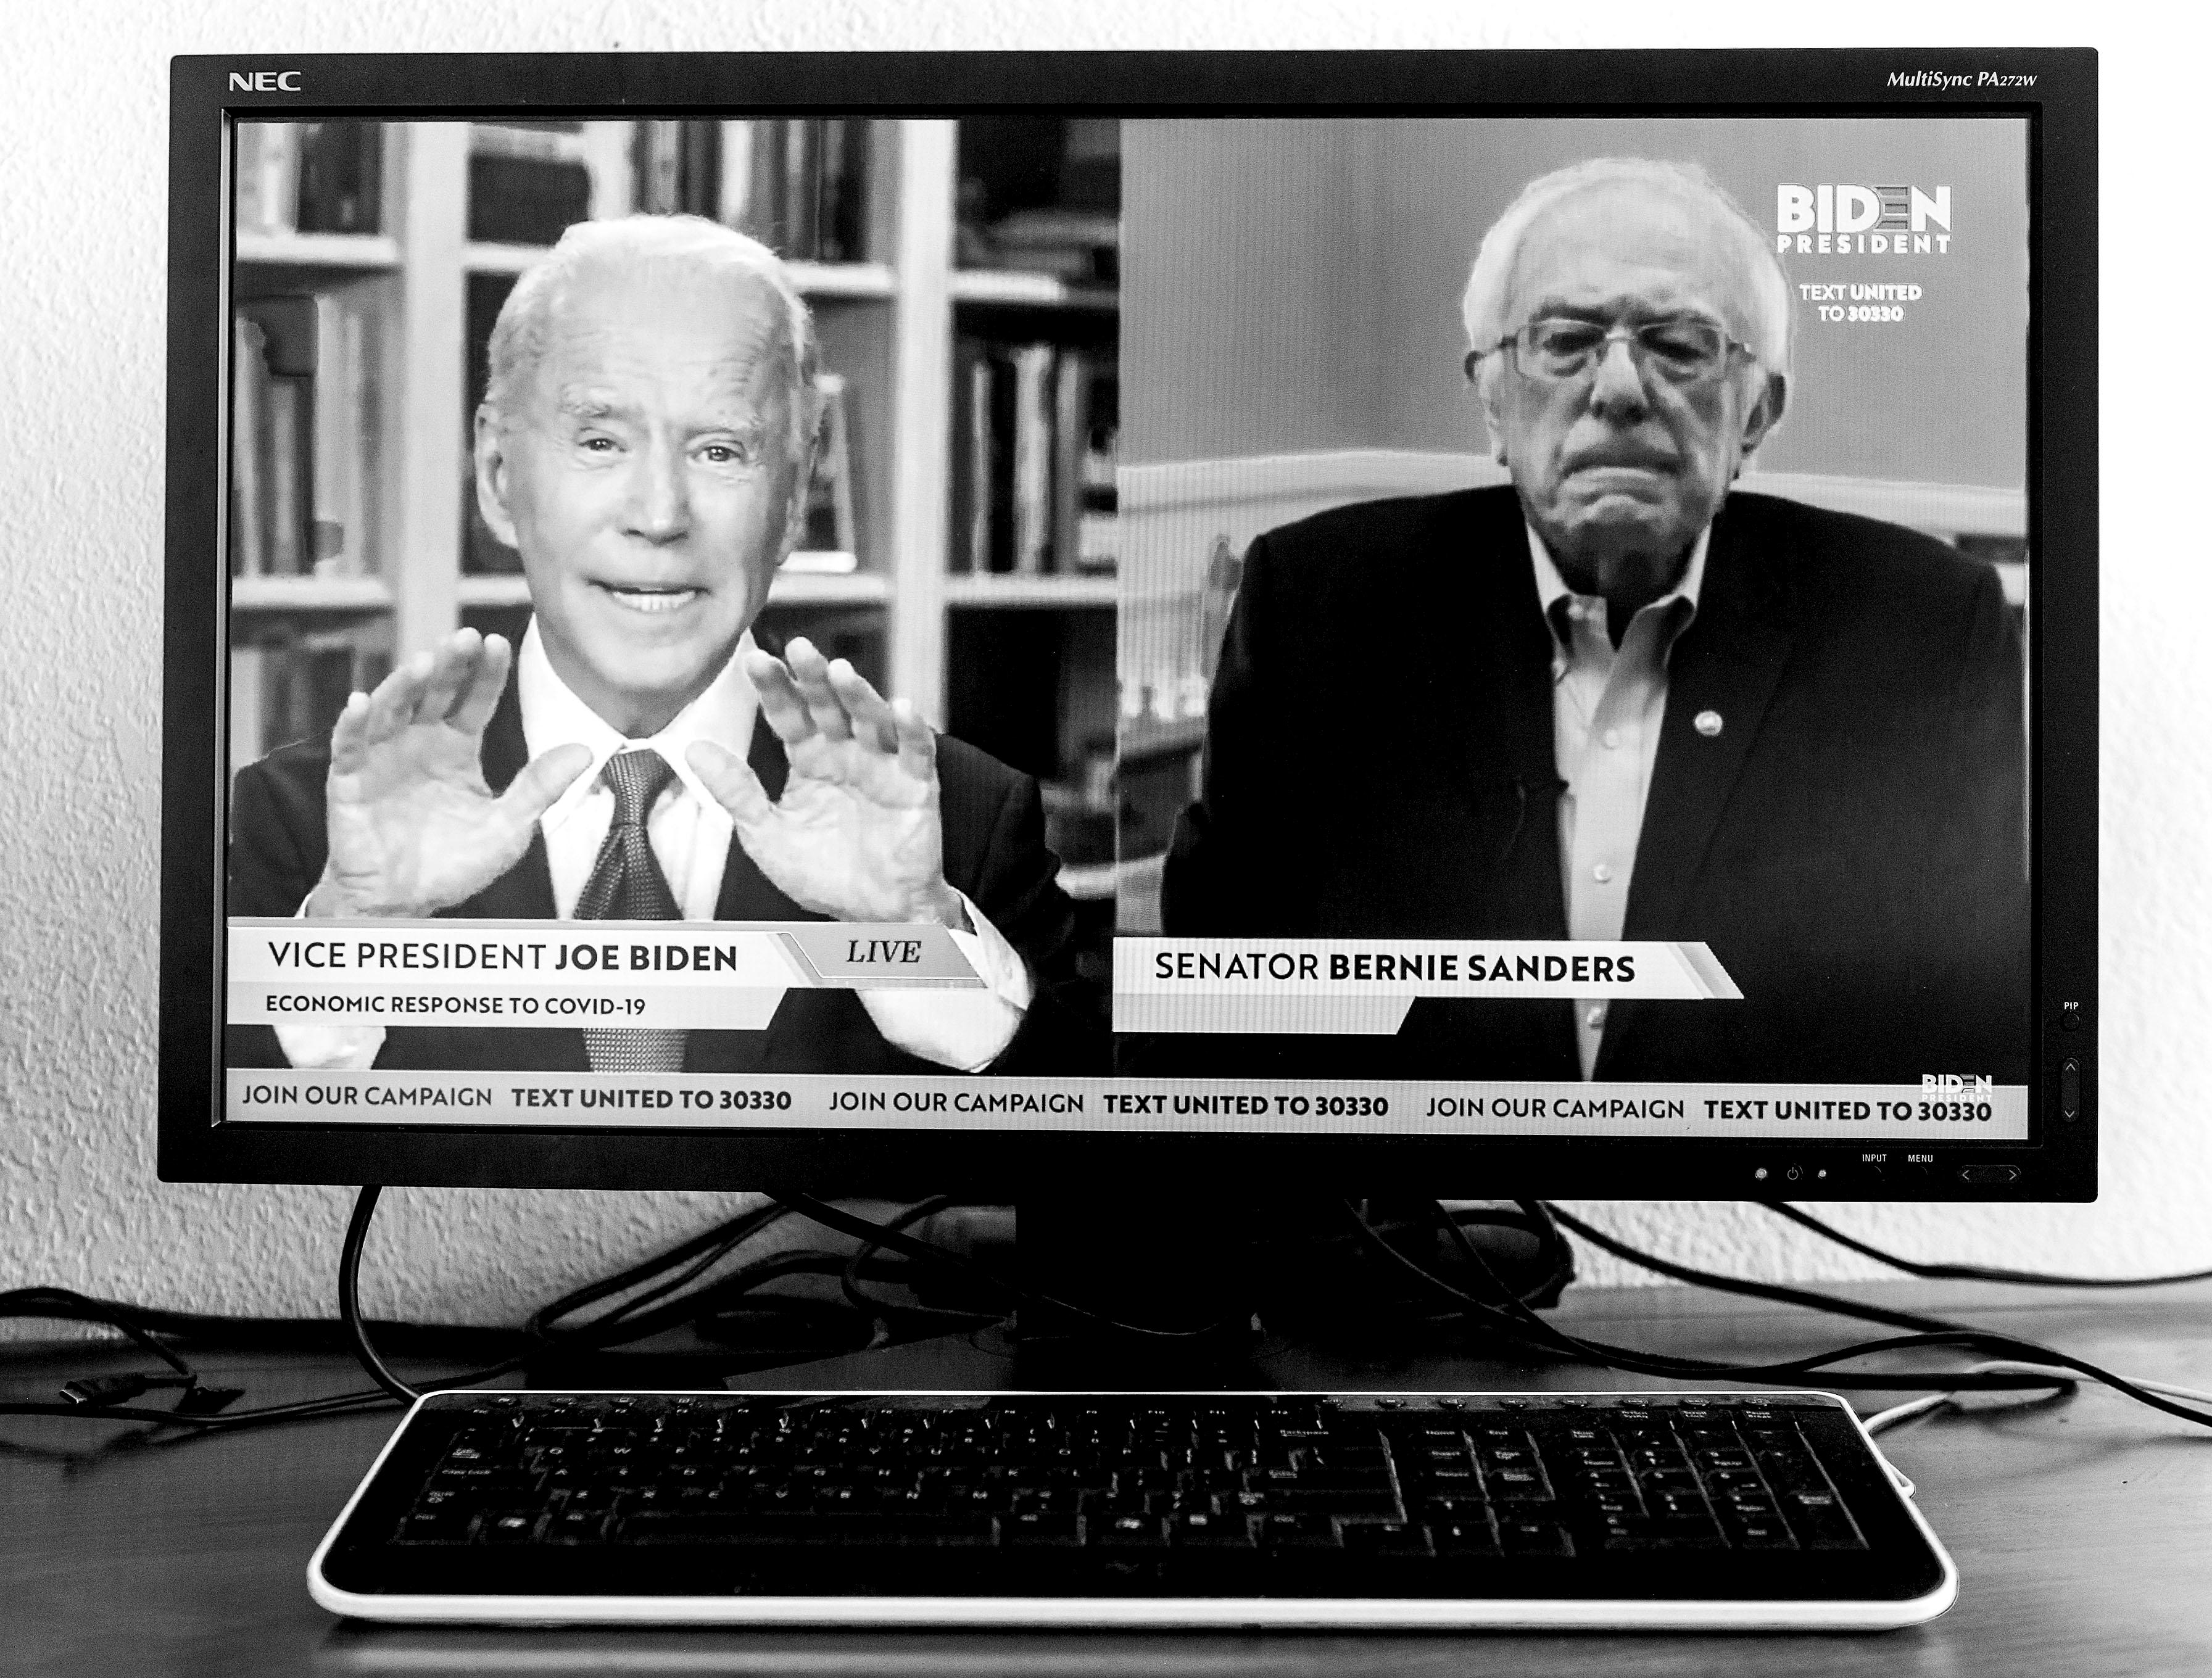 Sanders Bidenile toetust avaldamas. Foto: Brian Cahn / ZUMA Wire / Scanpix